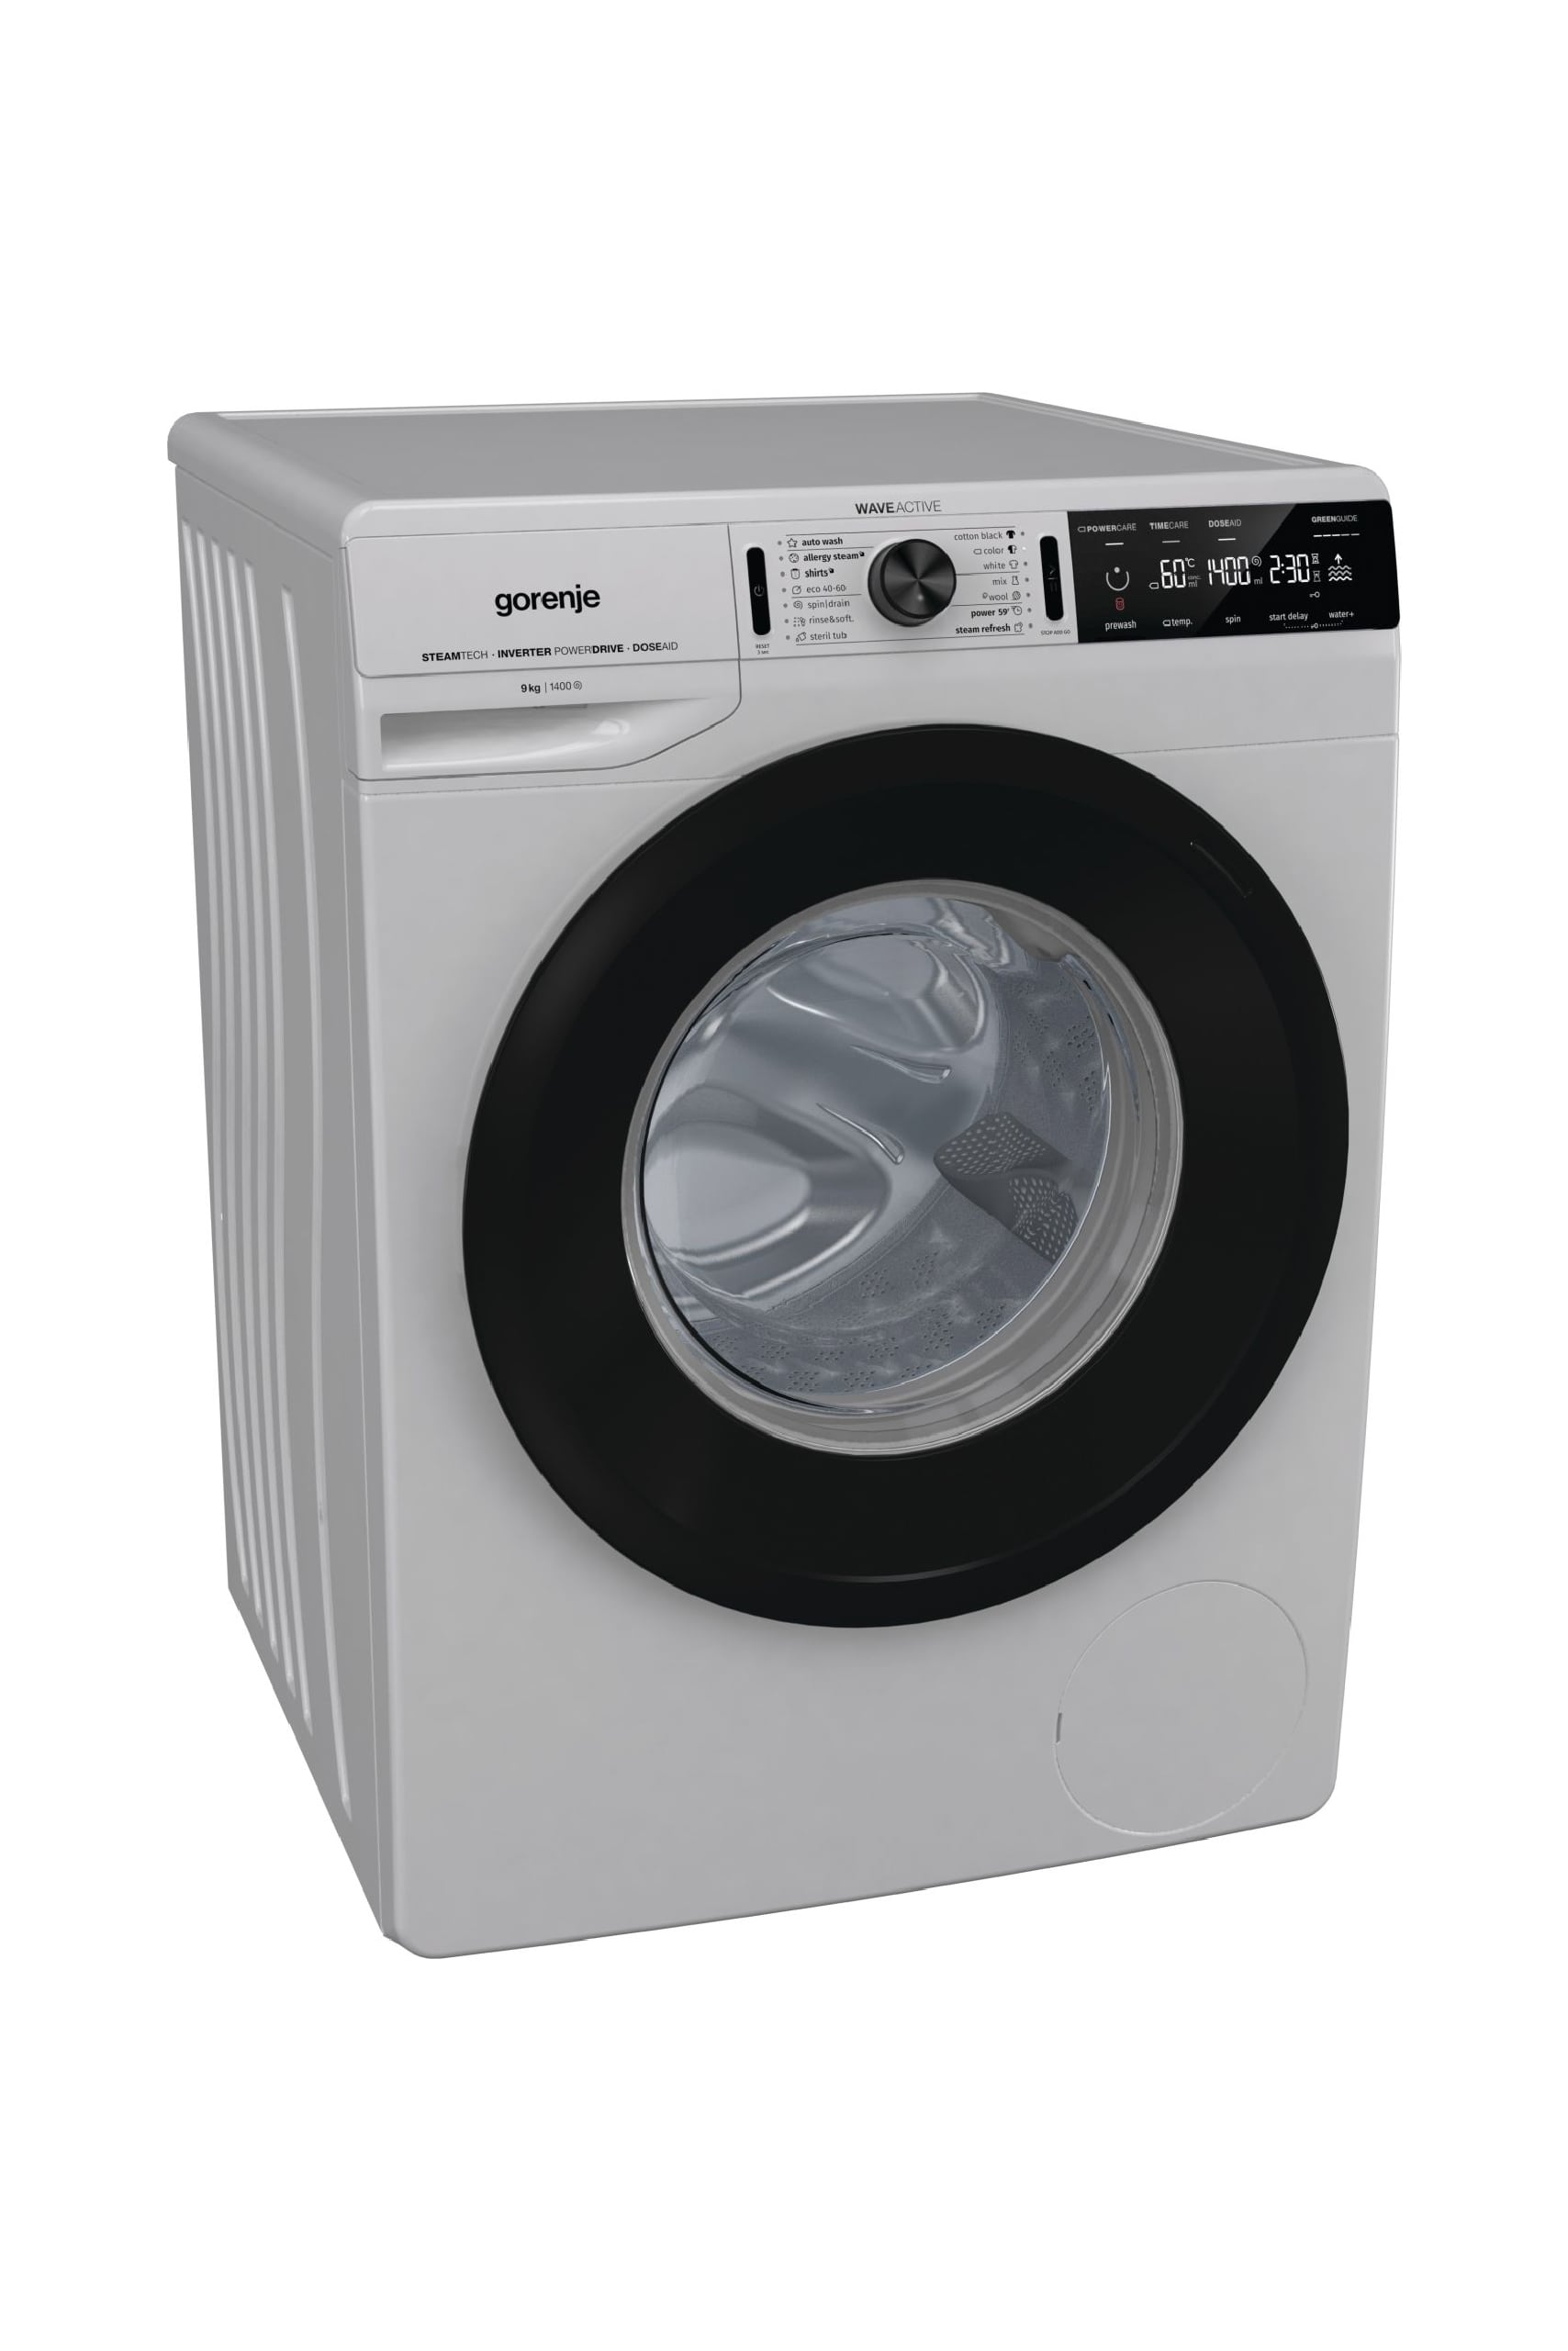 Goronia washing machine 9 kg 1400 cycles A++ - Silver